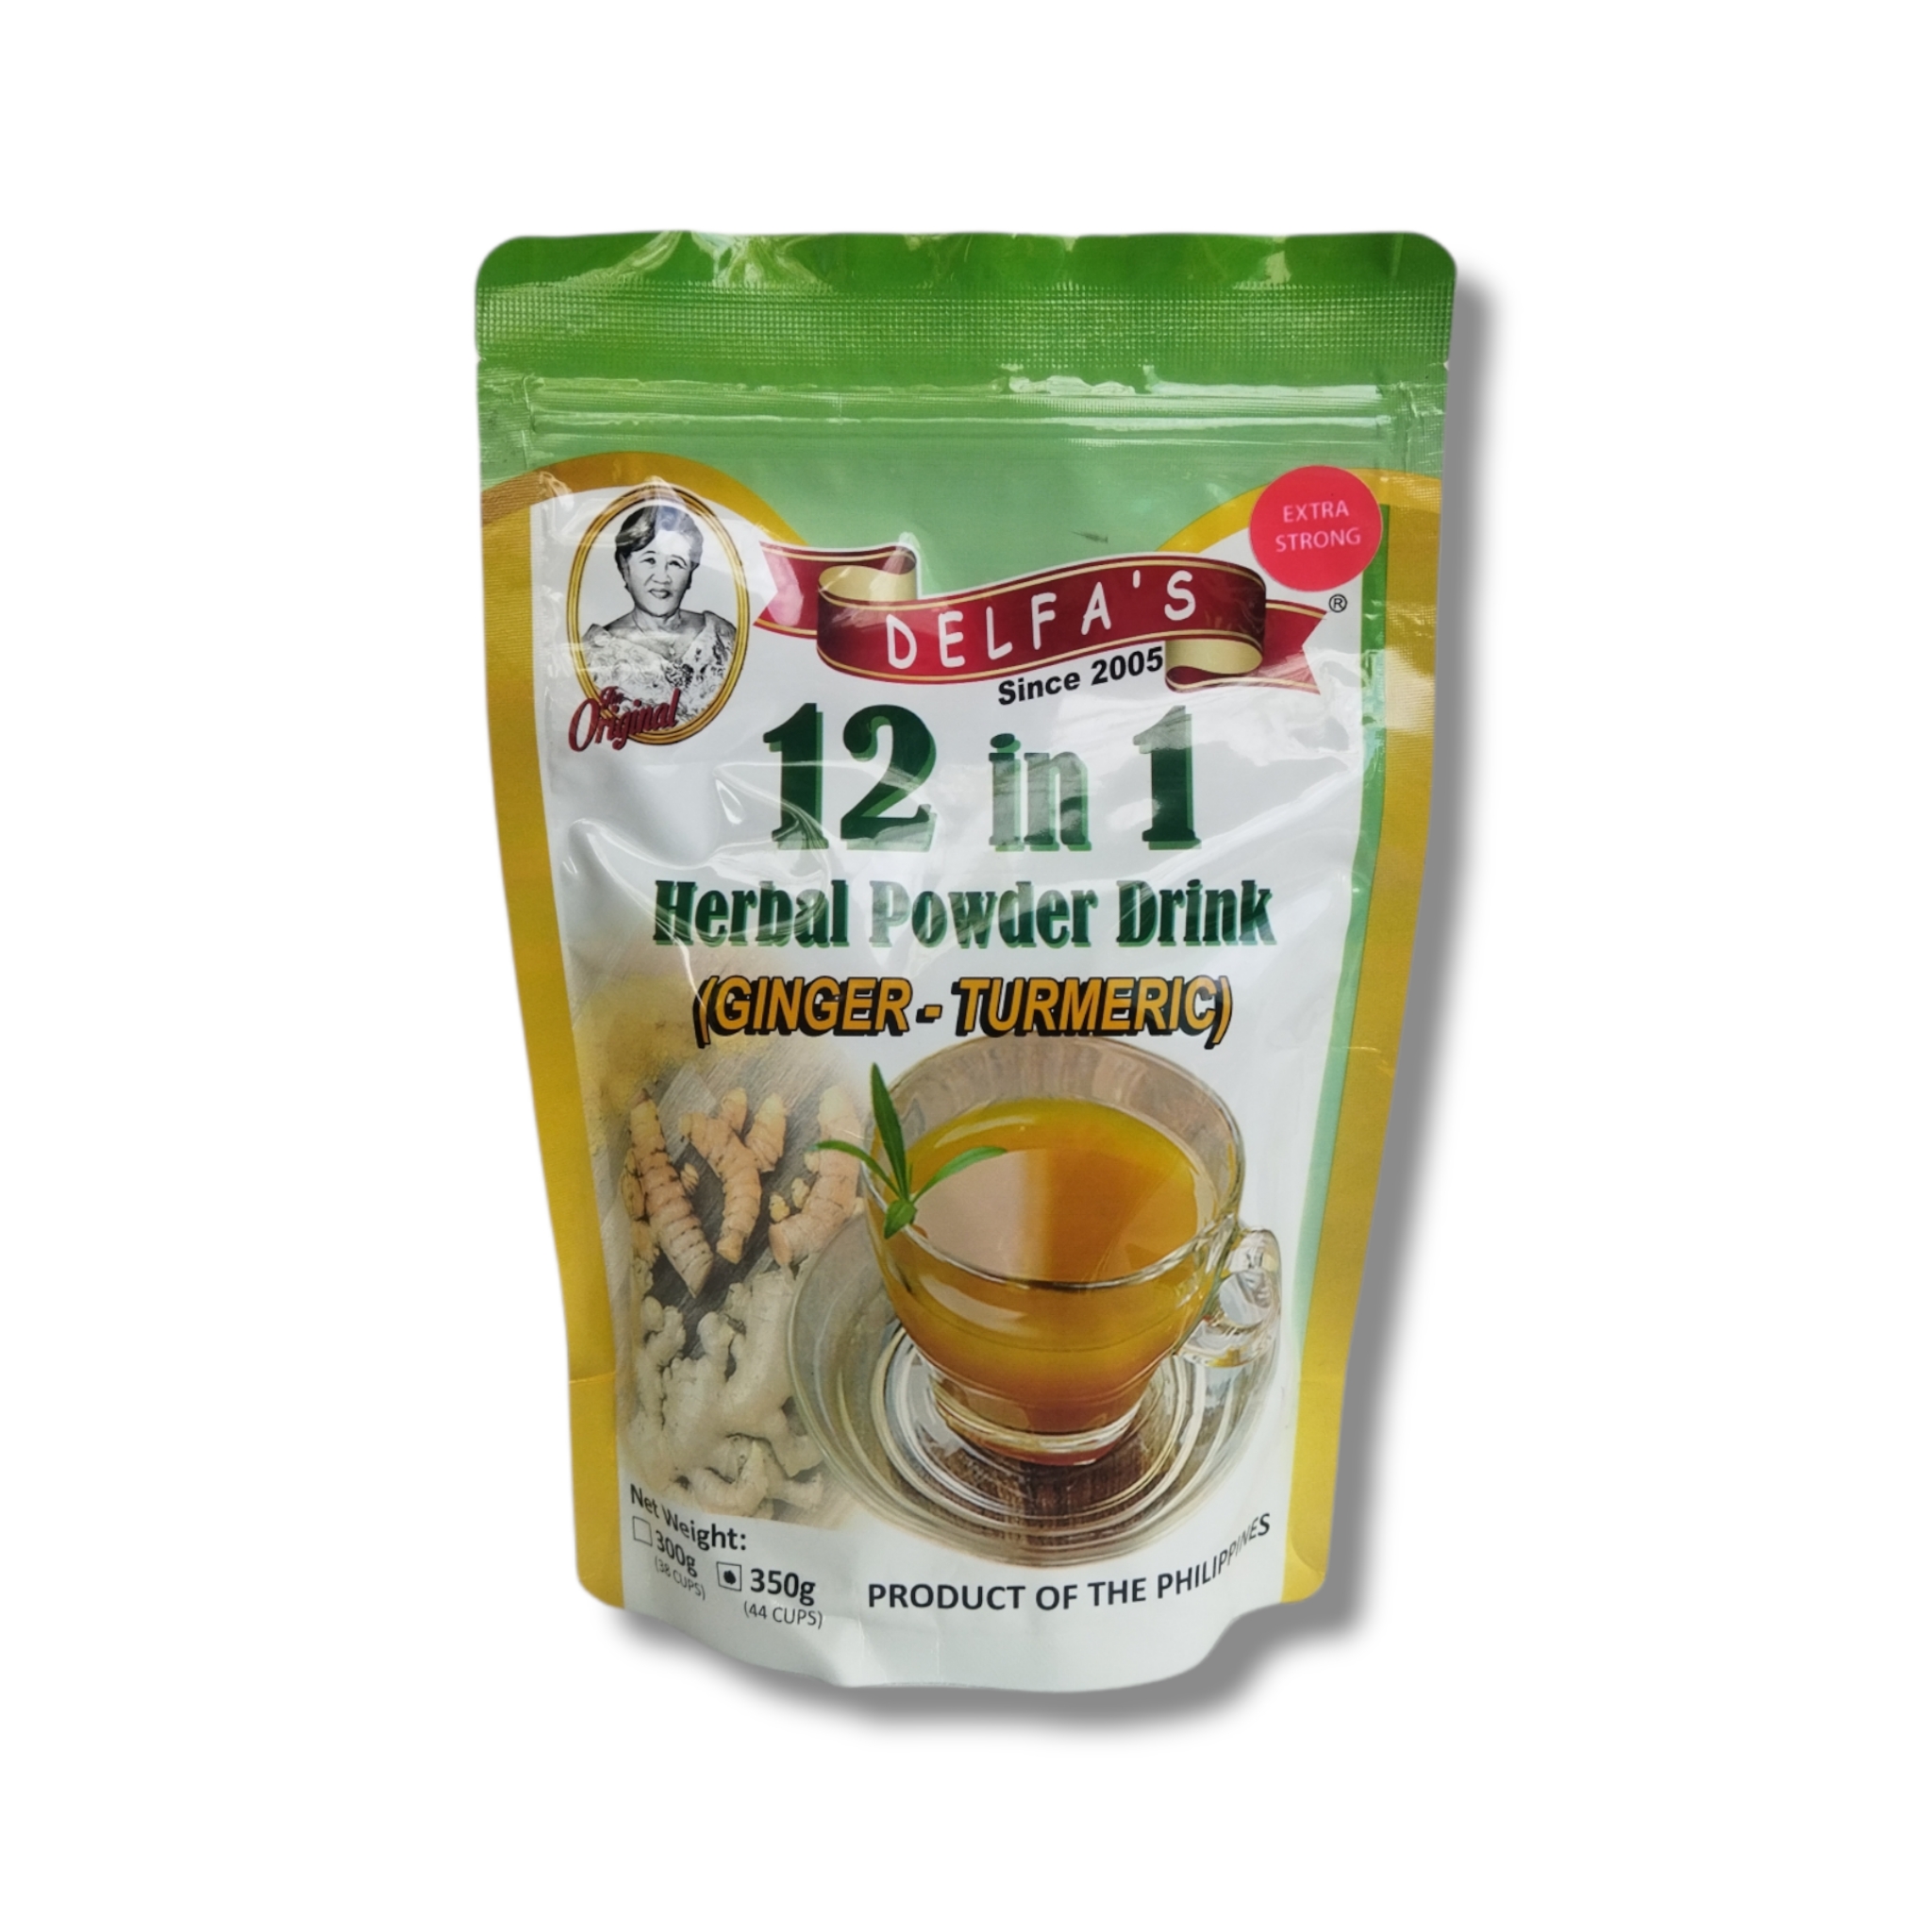 Delfa's 12in1 Herbal Powder Drink Ginger-Turmeric Pasalubong items ...